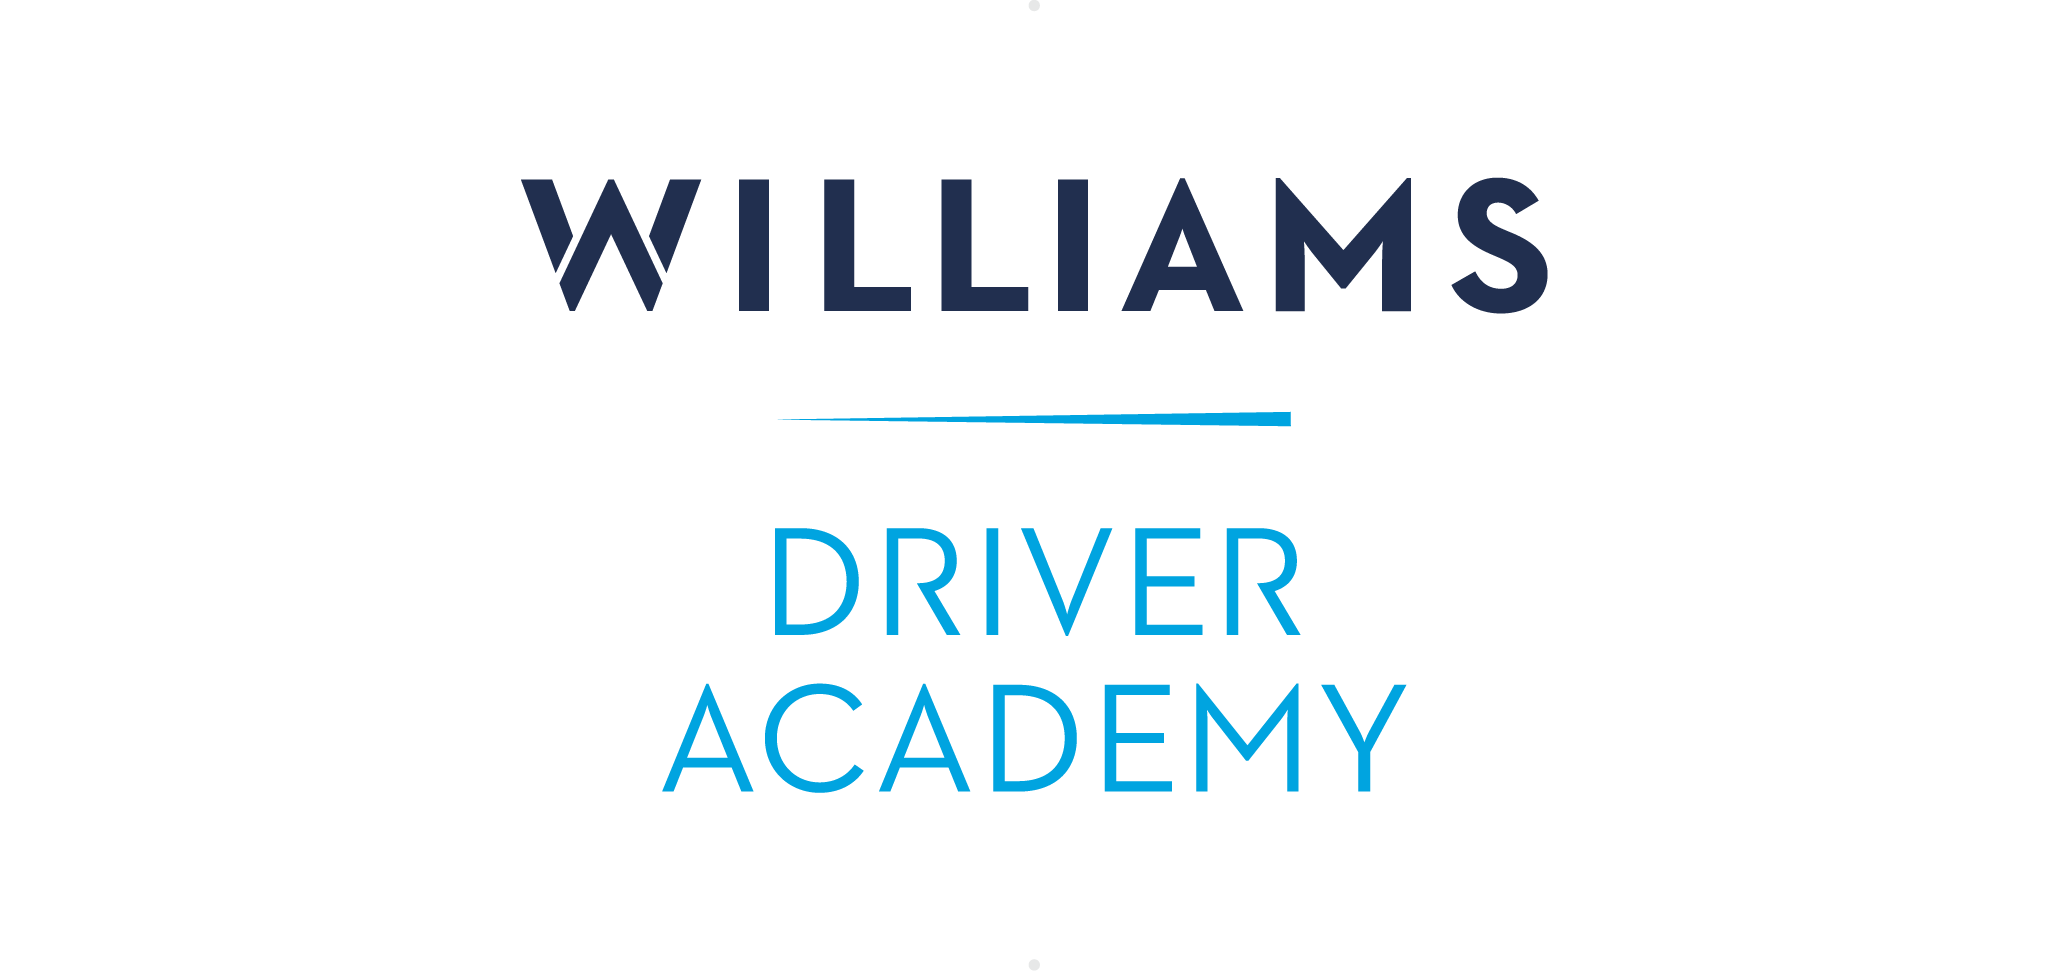 Williams Driver Academy logo